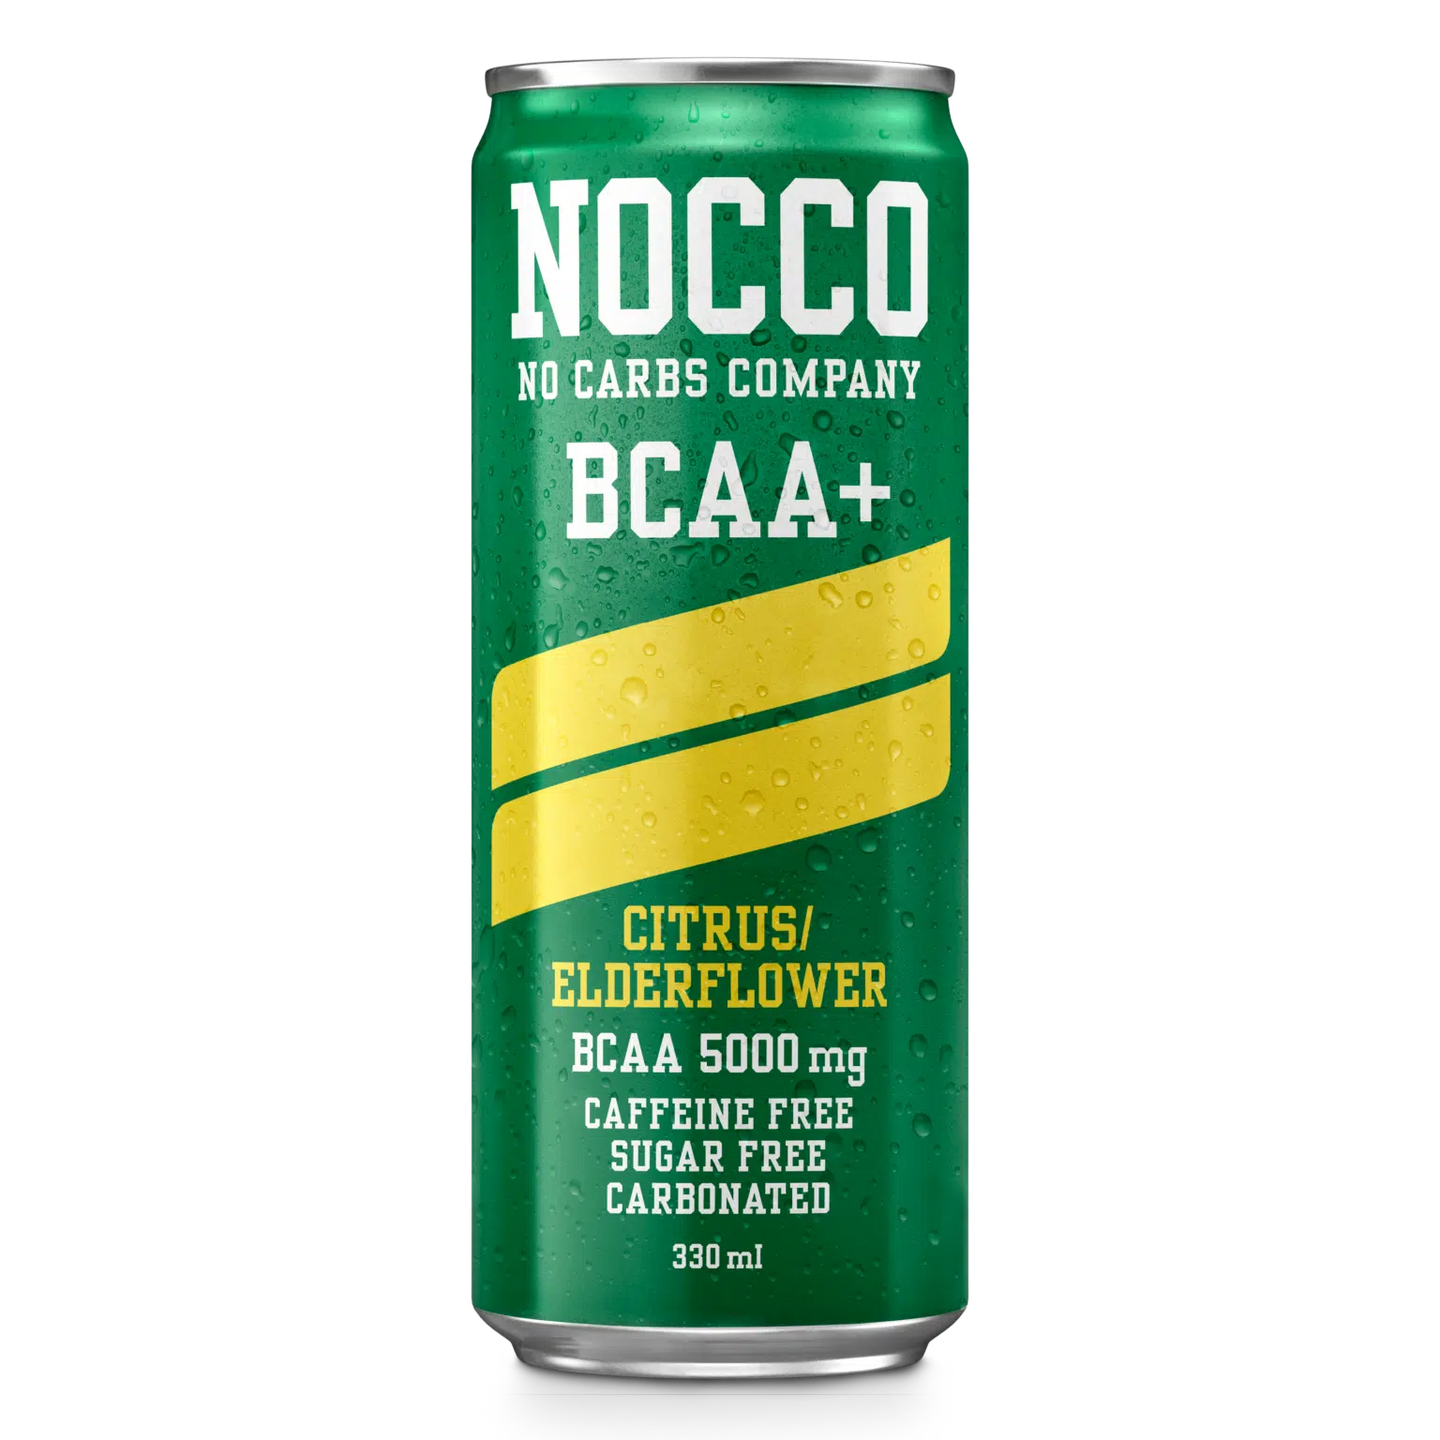 NOCCO BCAA+ - 1 x 330ml